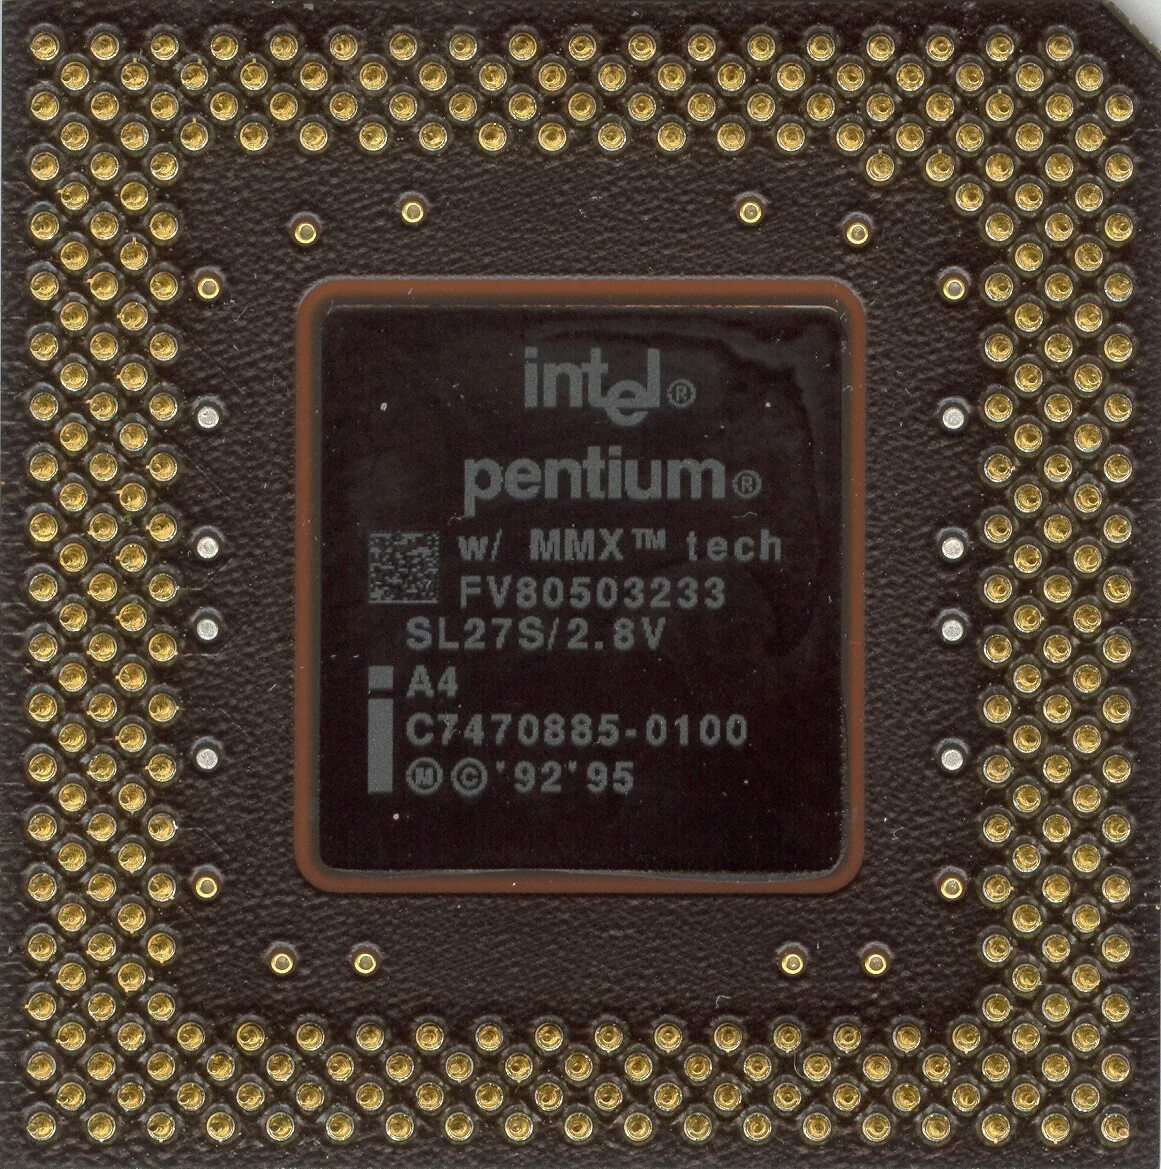 Интел коре пентиум